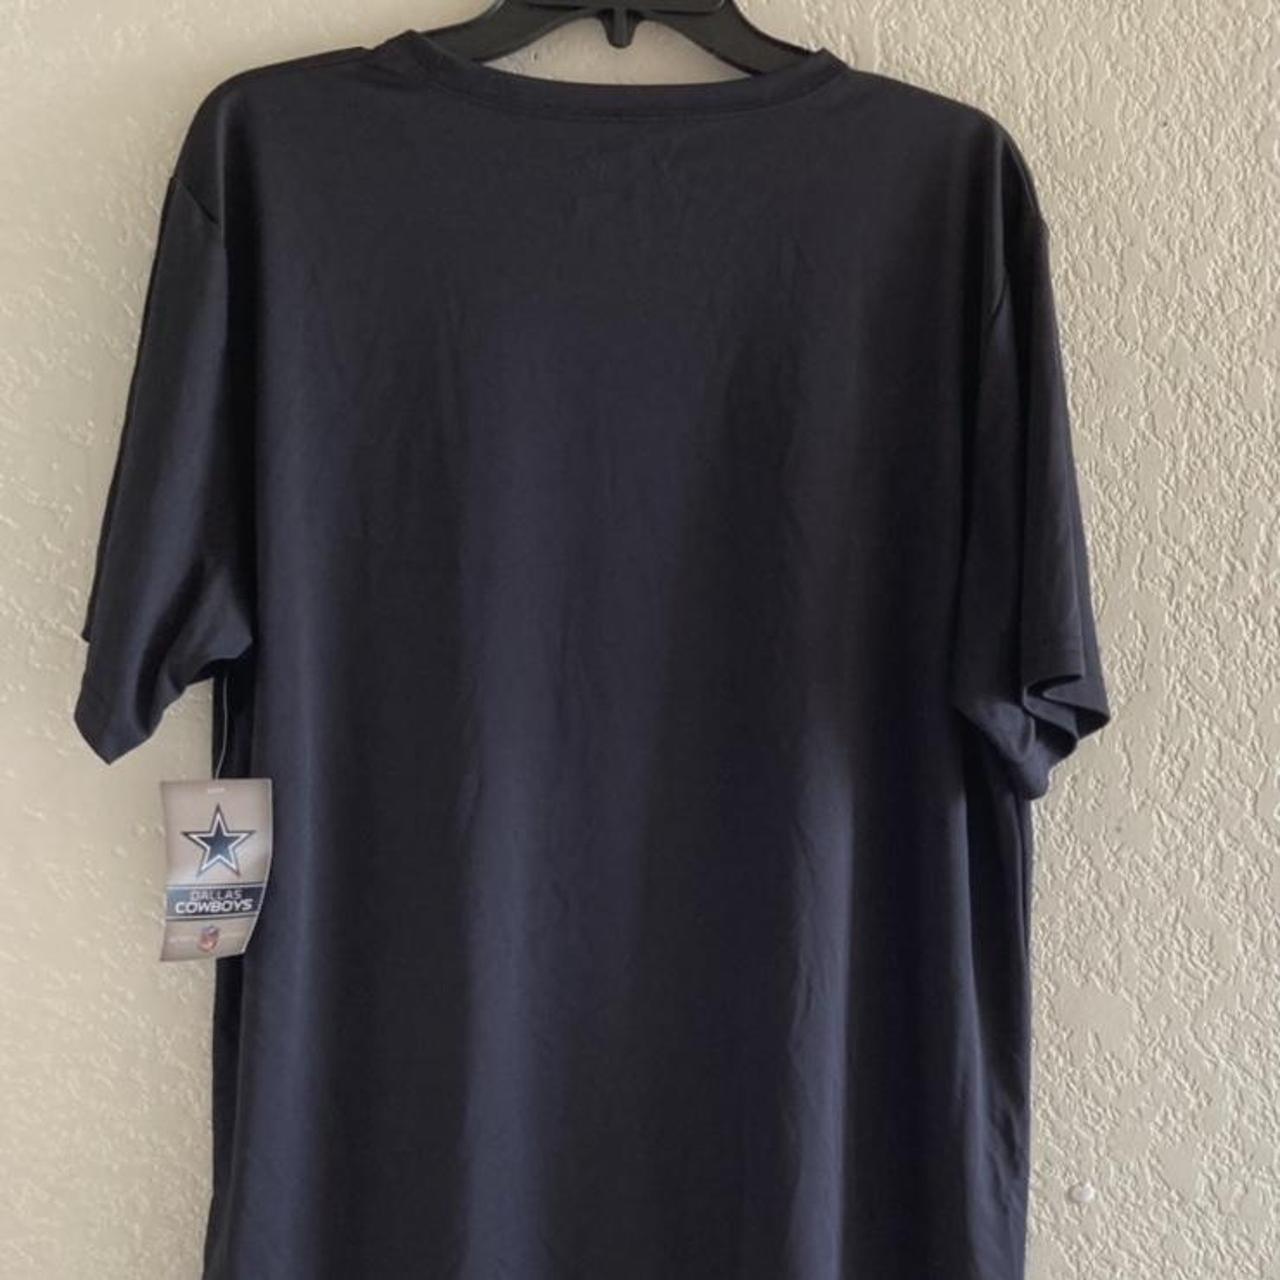 Product Image 3 - Dallas Cowboys Authentic Tee Shirt
Black
Men’s
Size